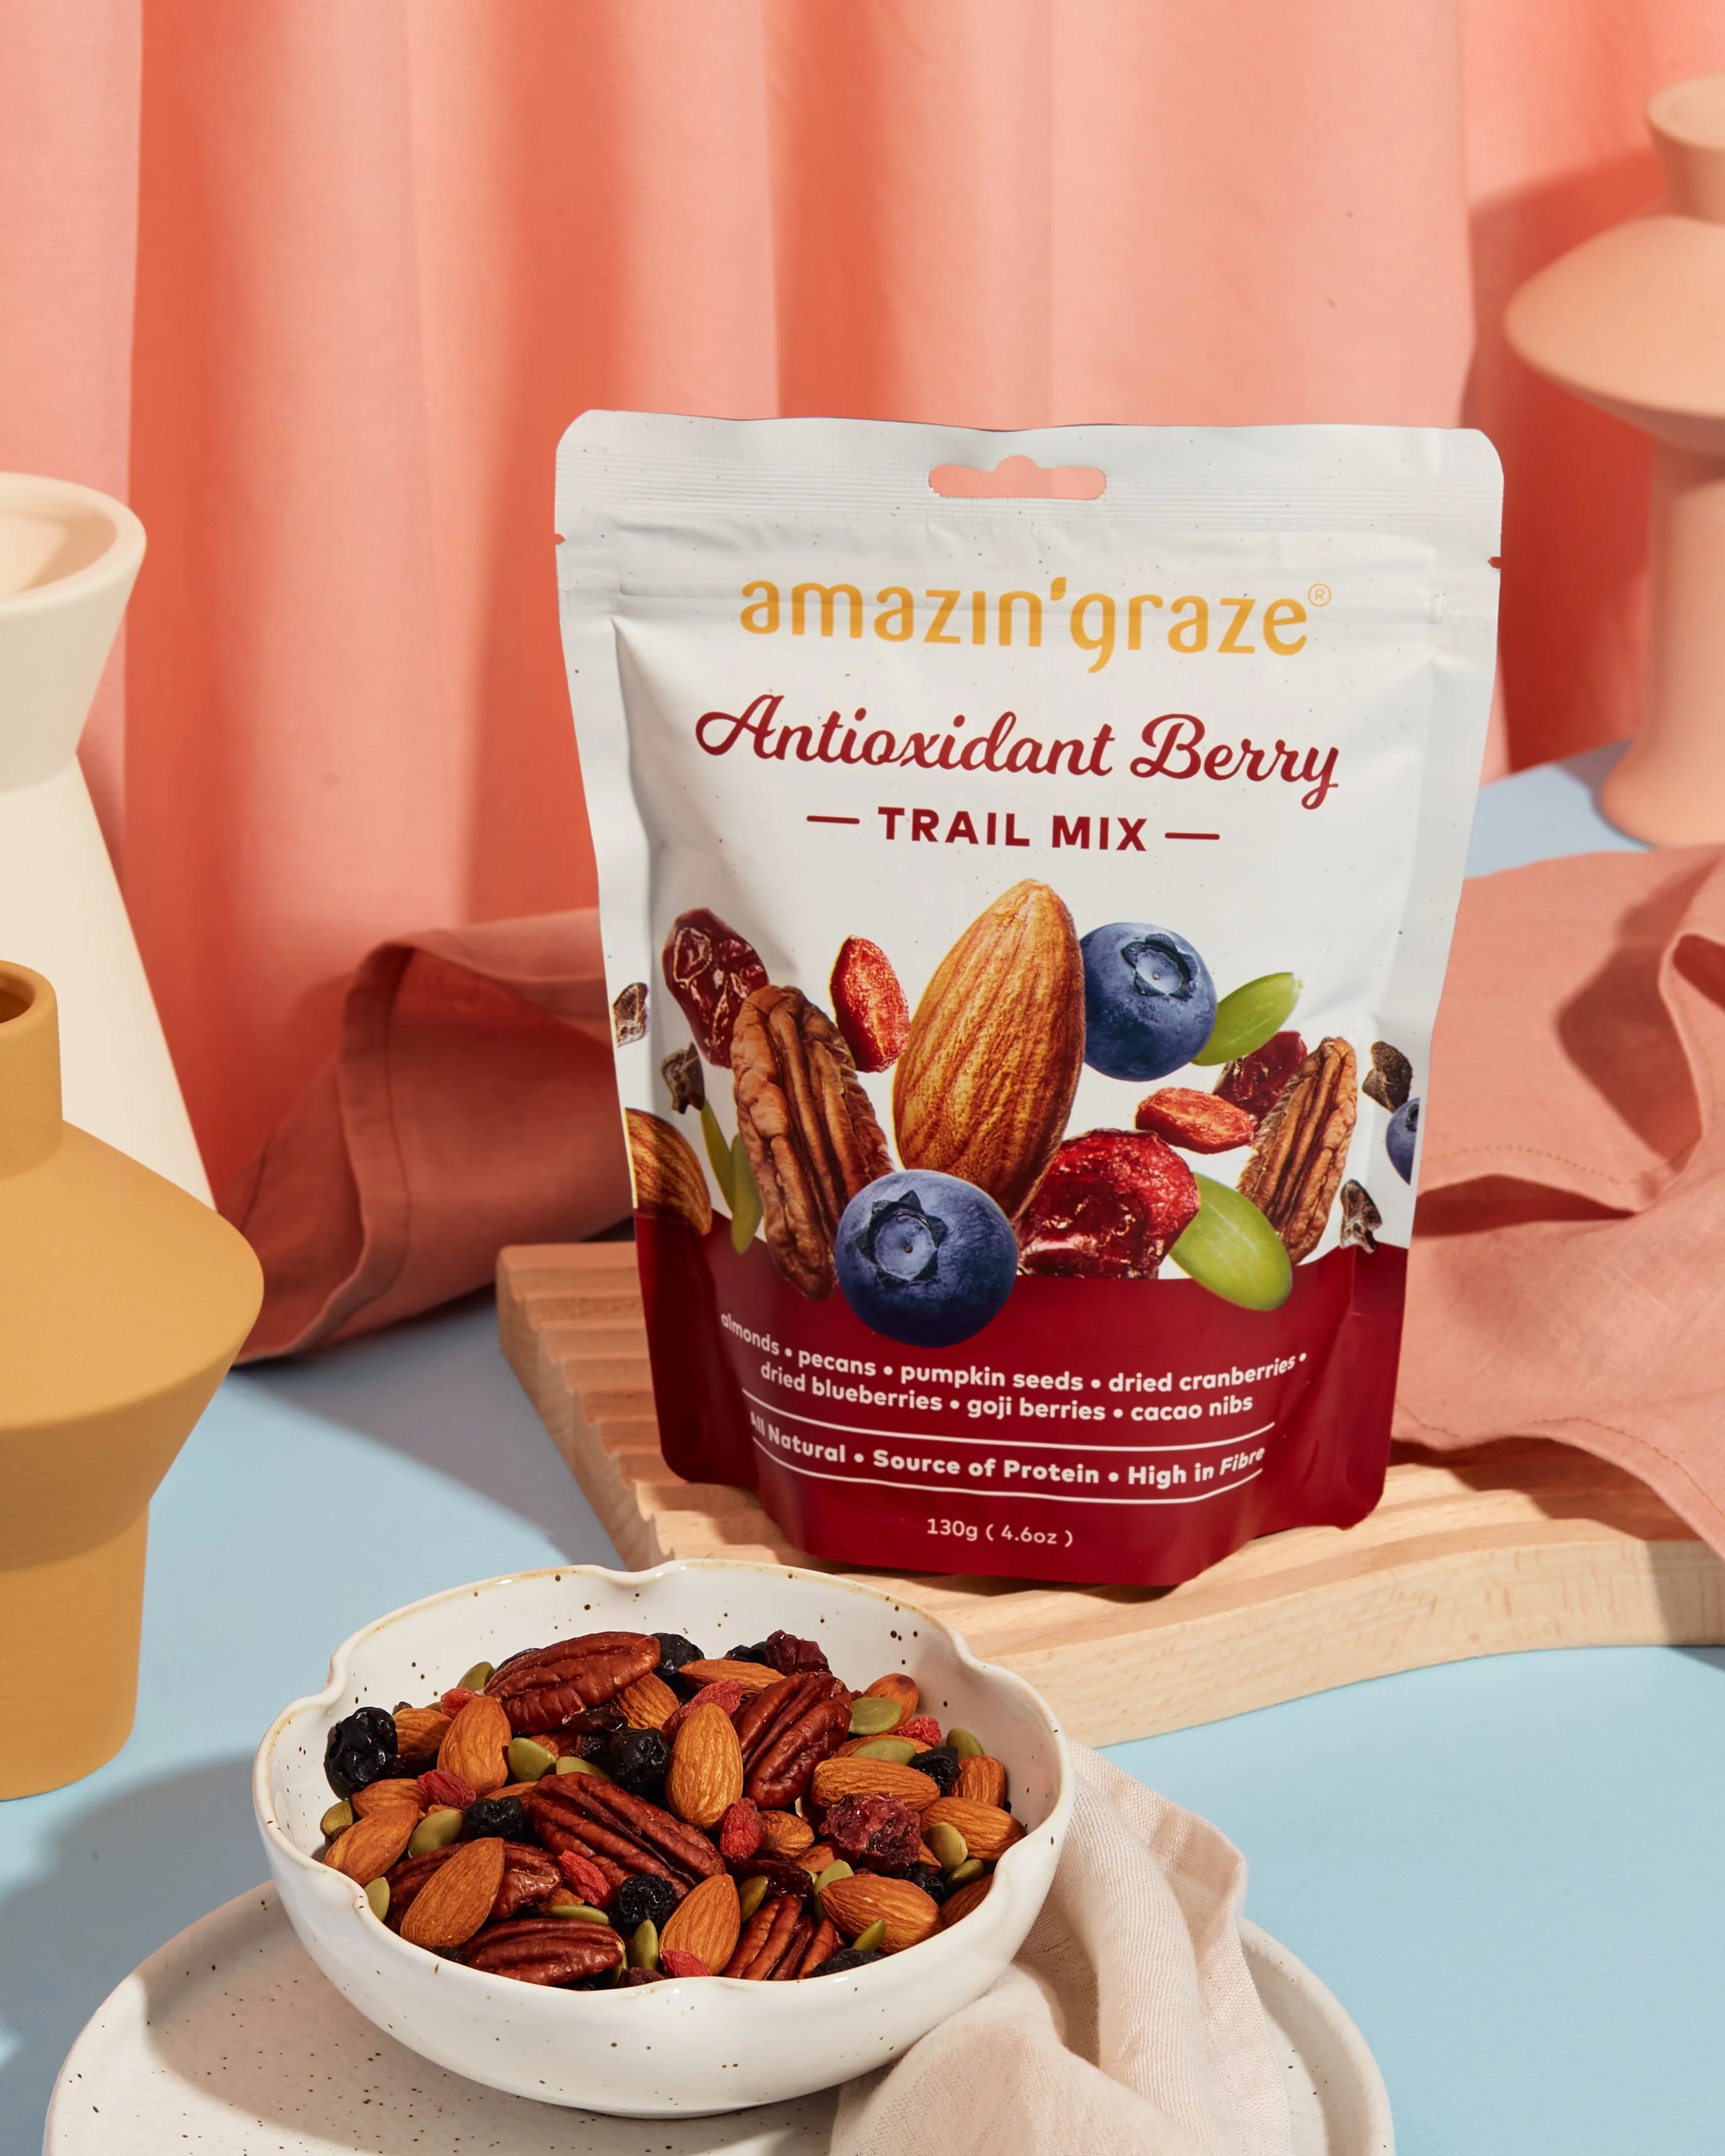 Amazin' Graze Antioxidant Berry Trail Mix Packaging